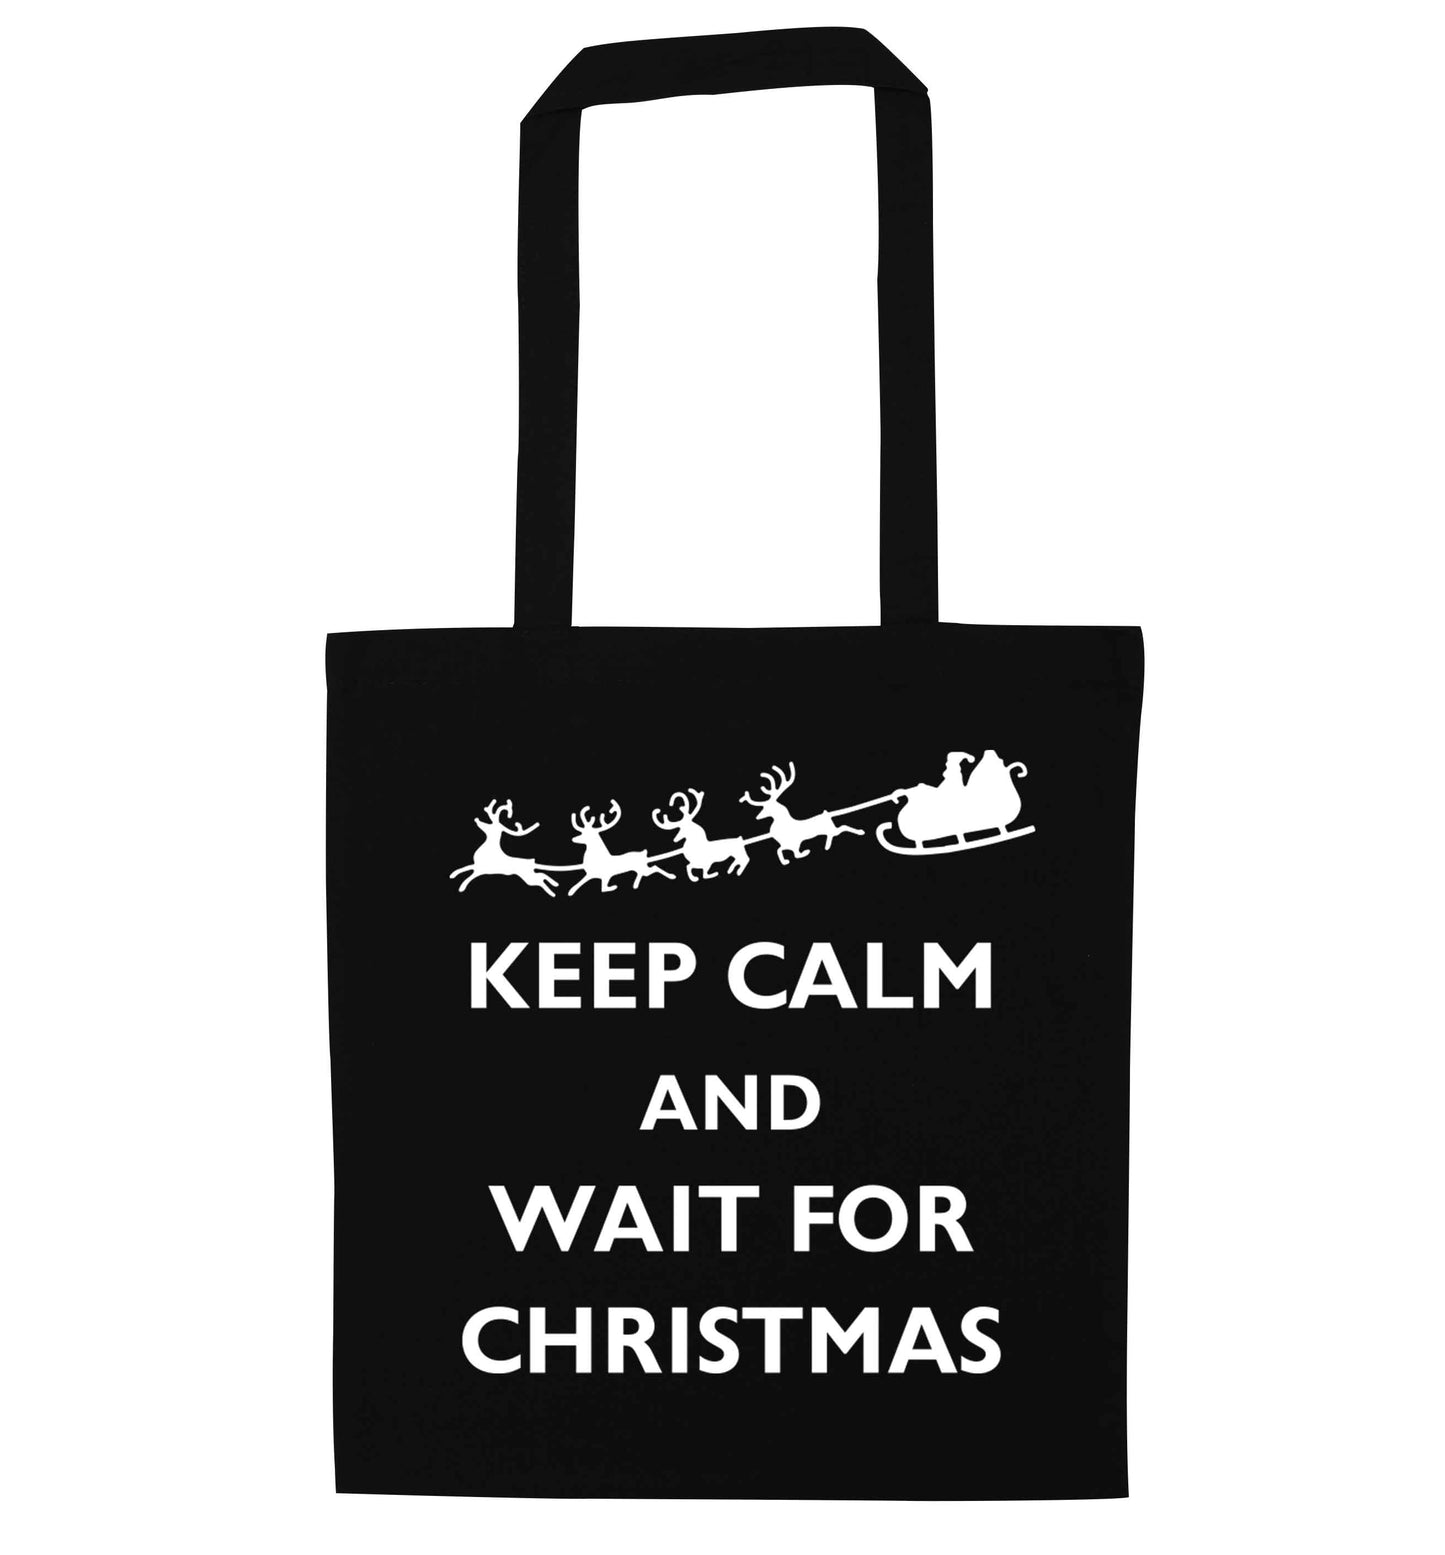 Keep calm and wait for Christmas black tote bag